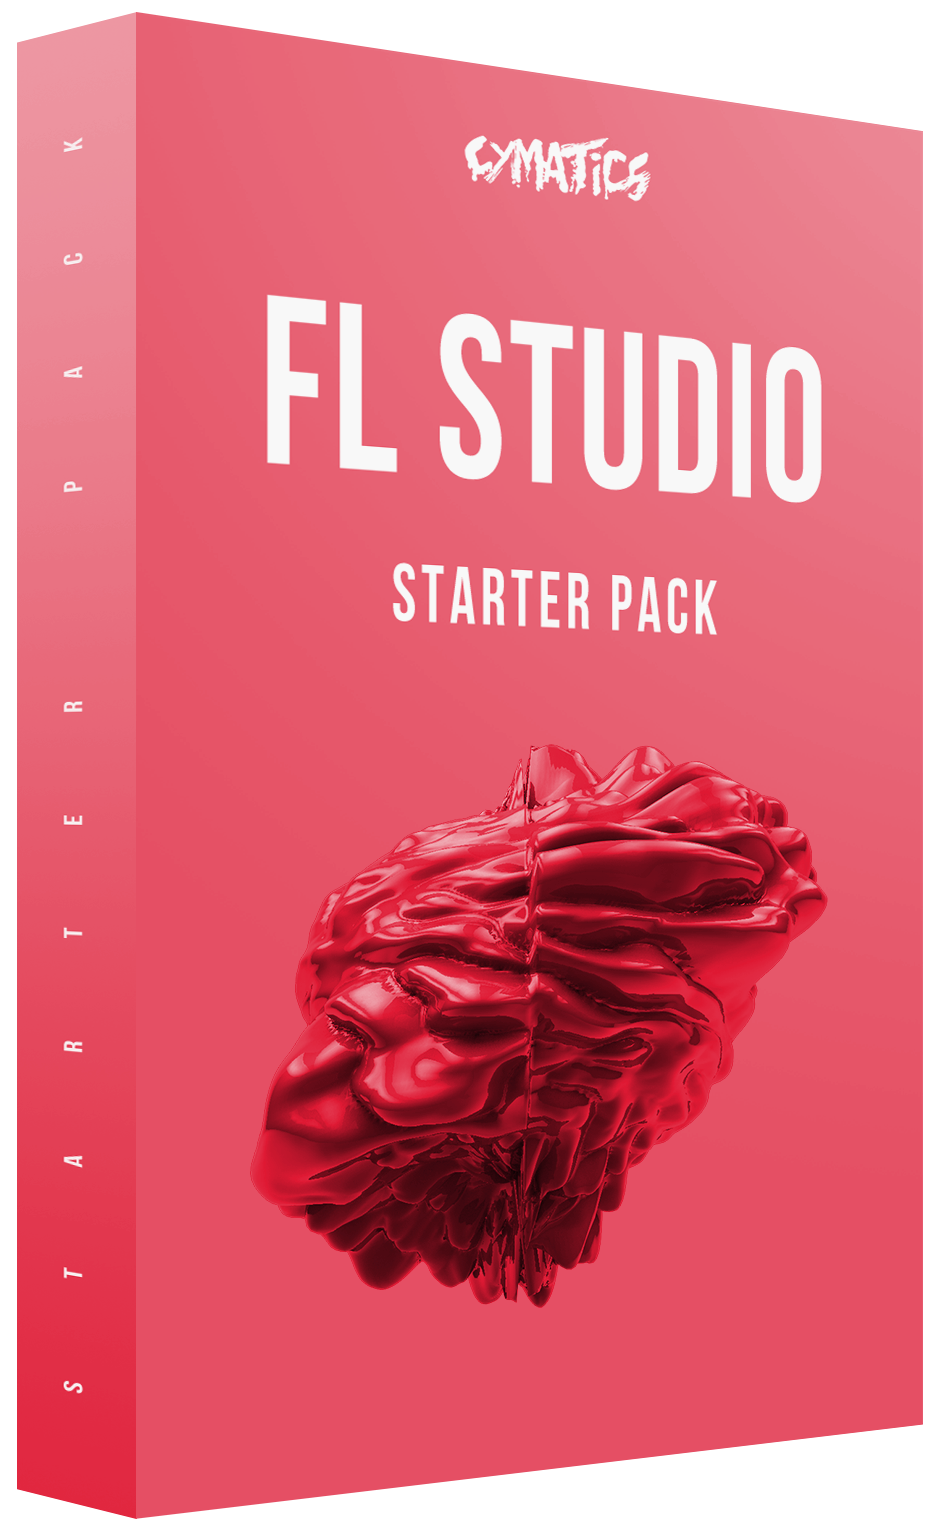 FL Studio Free Download for PC